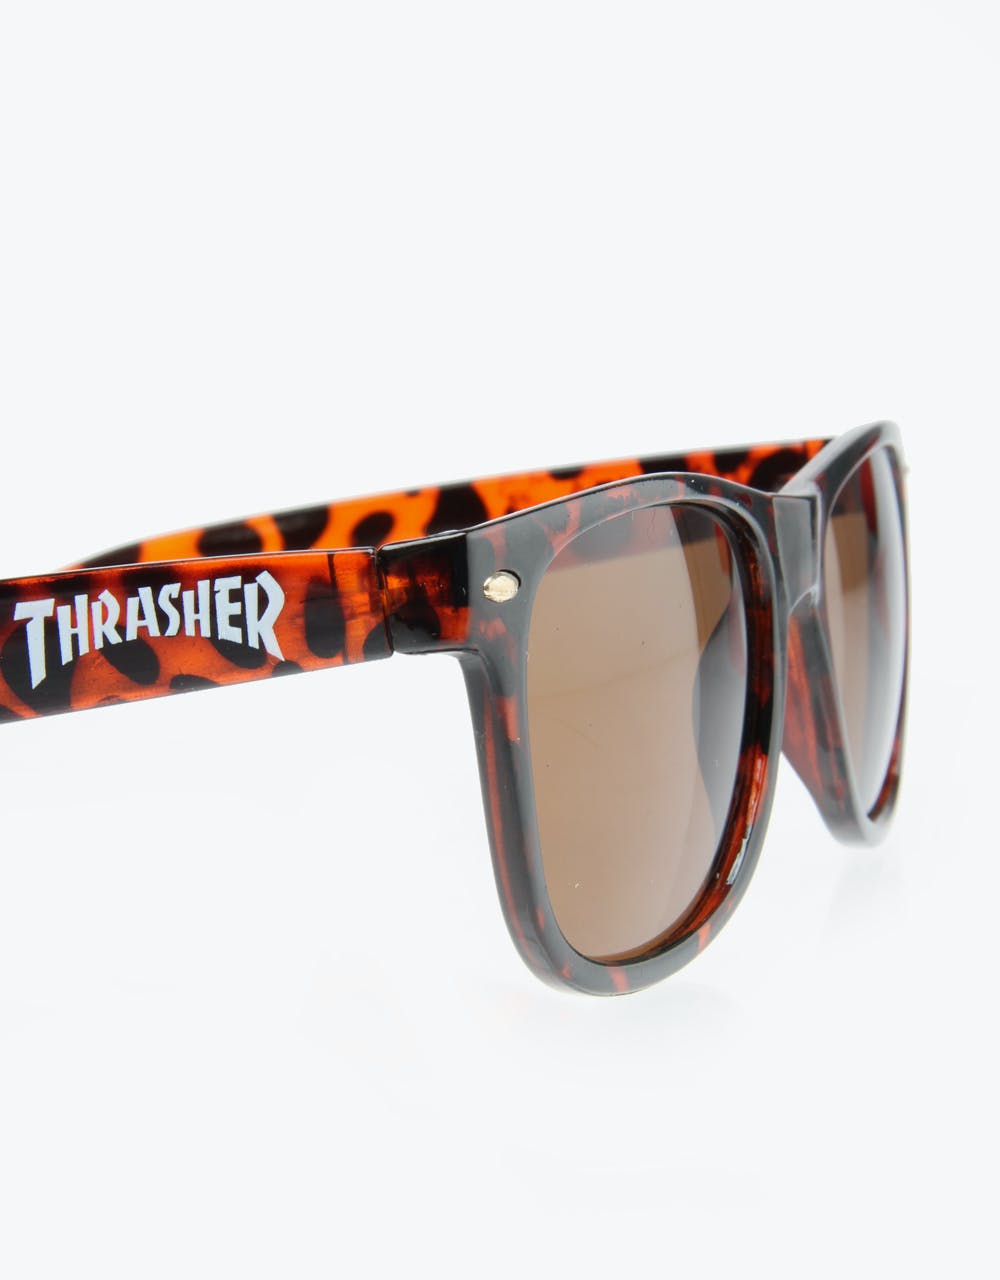 Thrasher Skate Mag Sunglasses - Tortoise